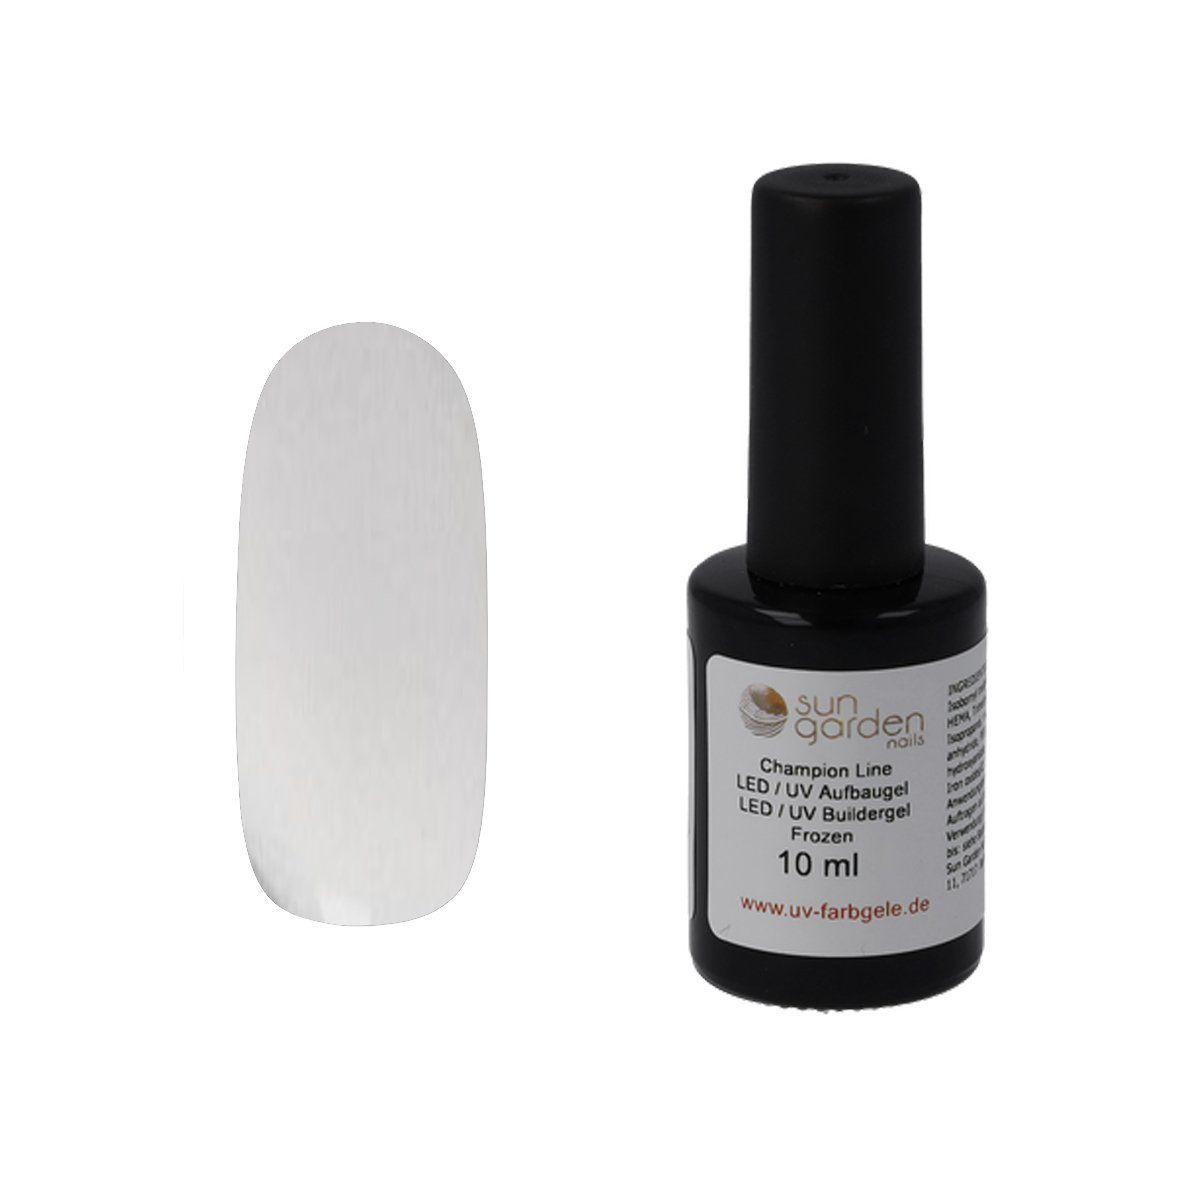 Sun Garden Nails UV-Gel 10 ml - Aufbaugel Frozen Pinselflasche UV